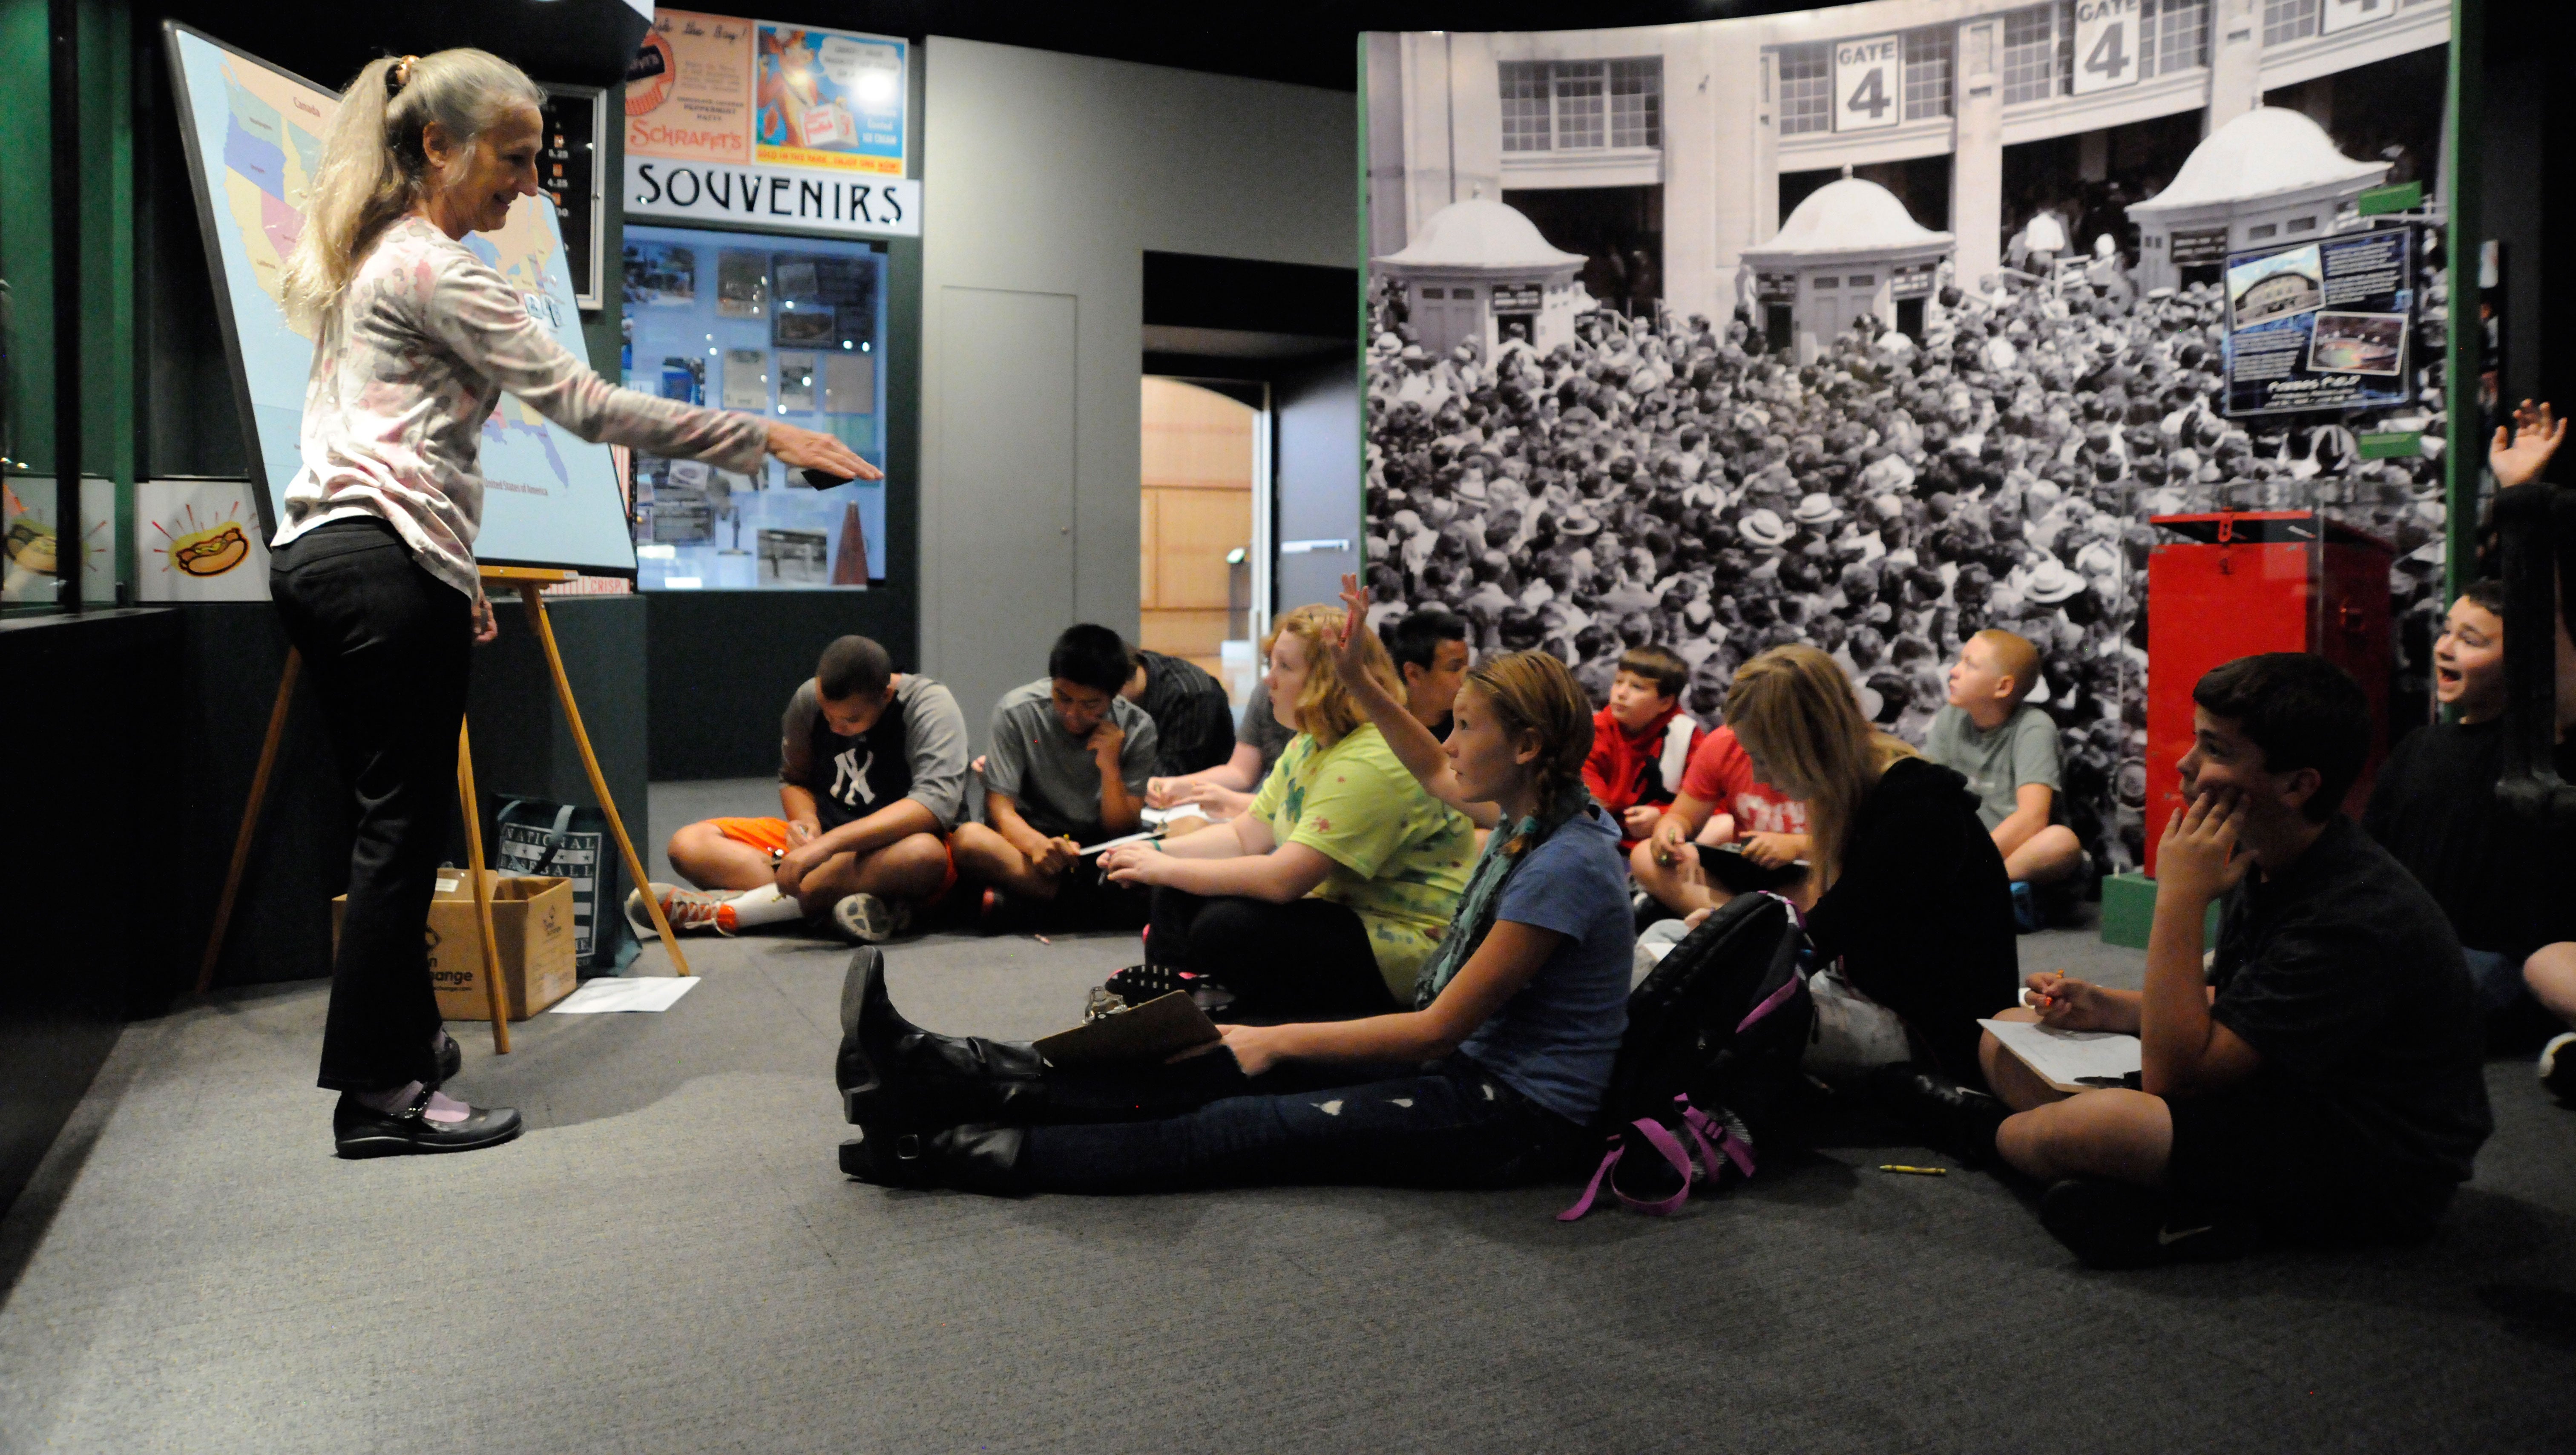 Children participating in a Museum program